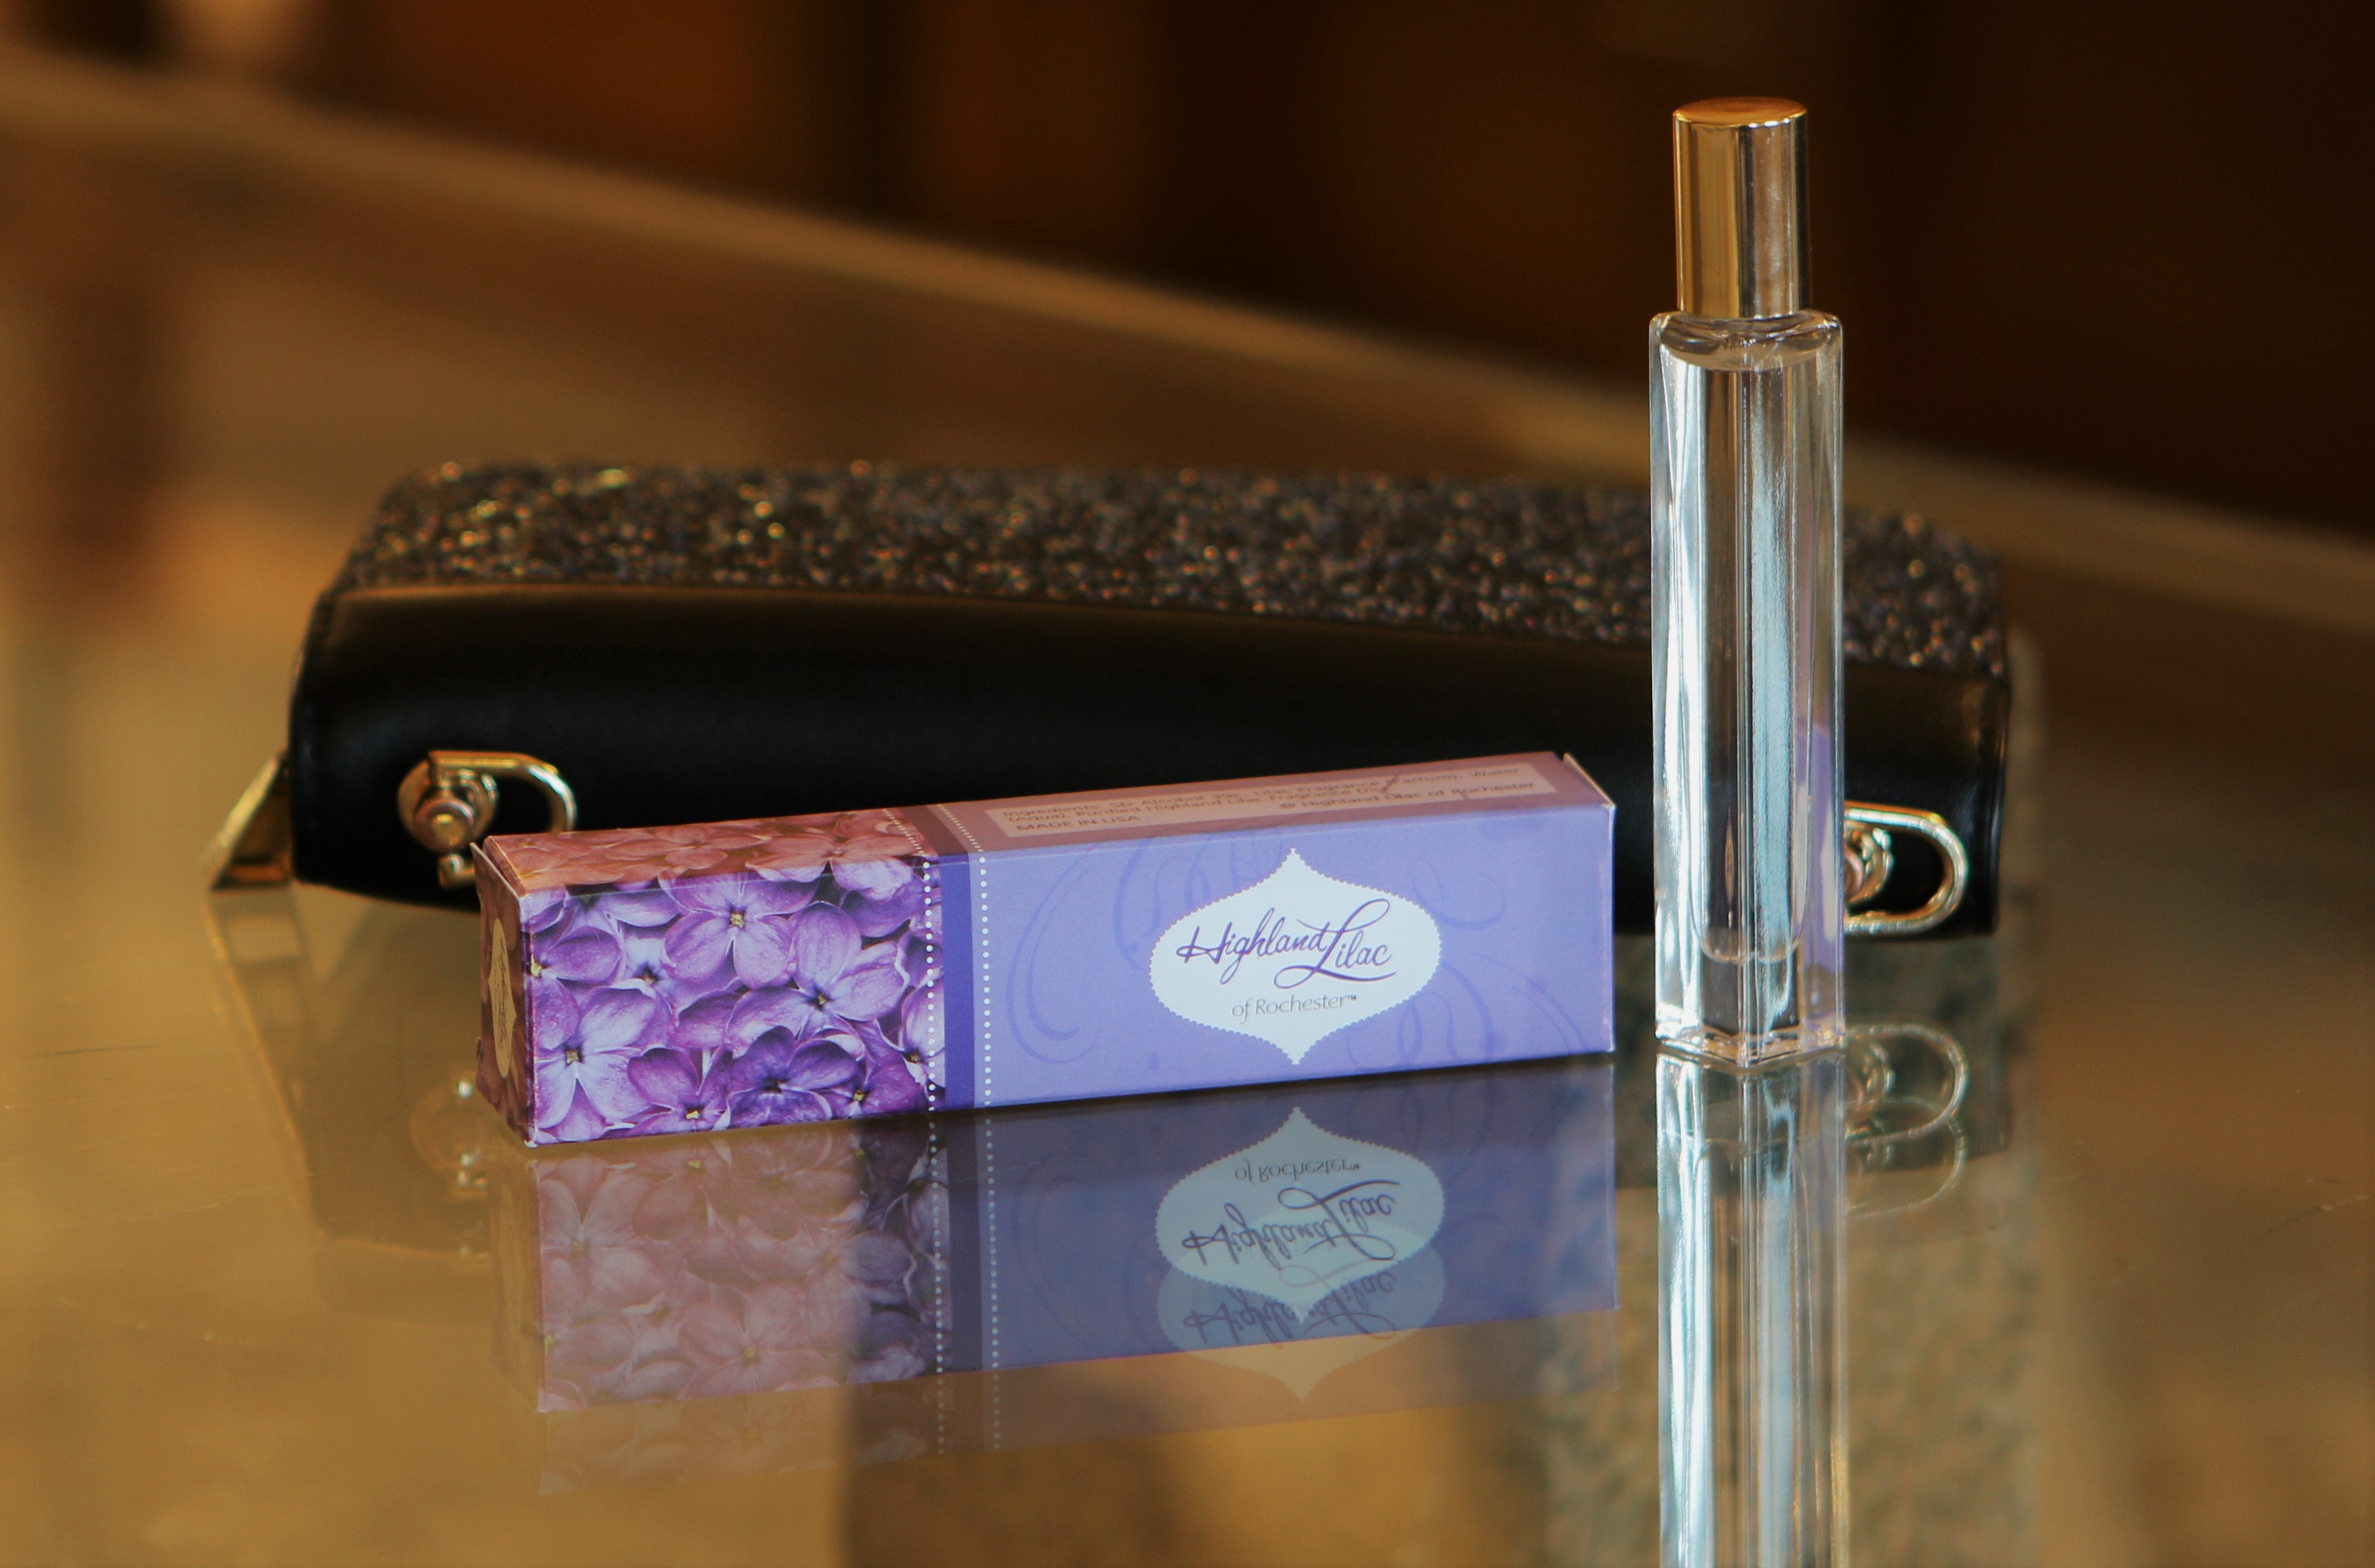 Highland Lilac of Rochester Eau de Parfum